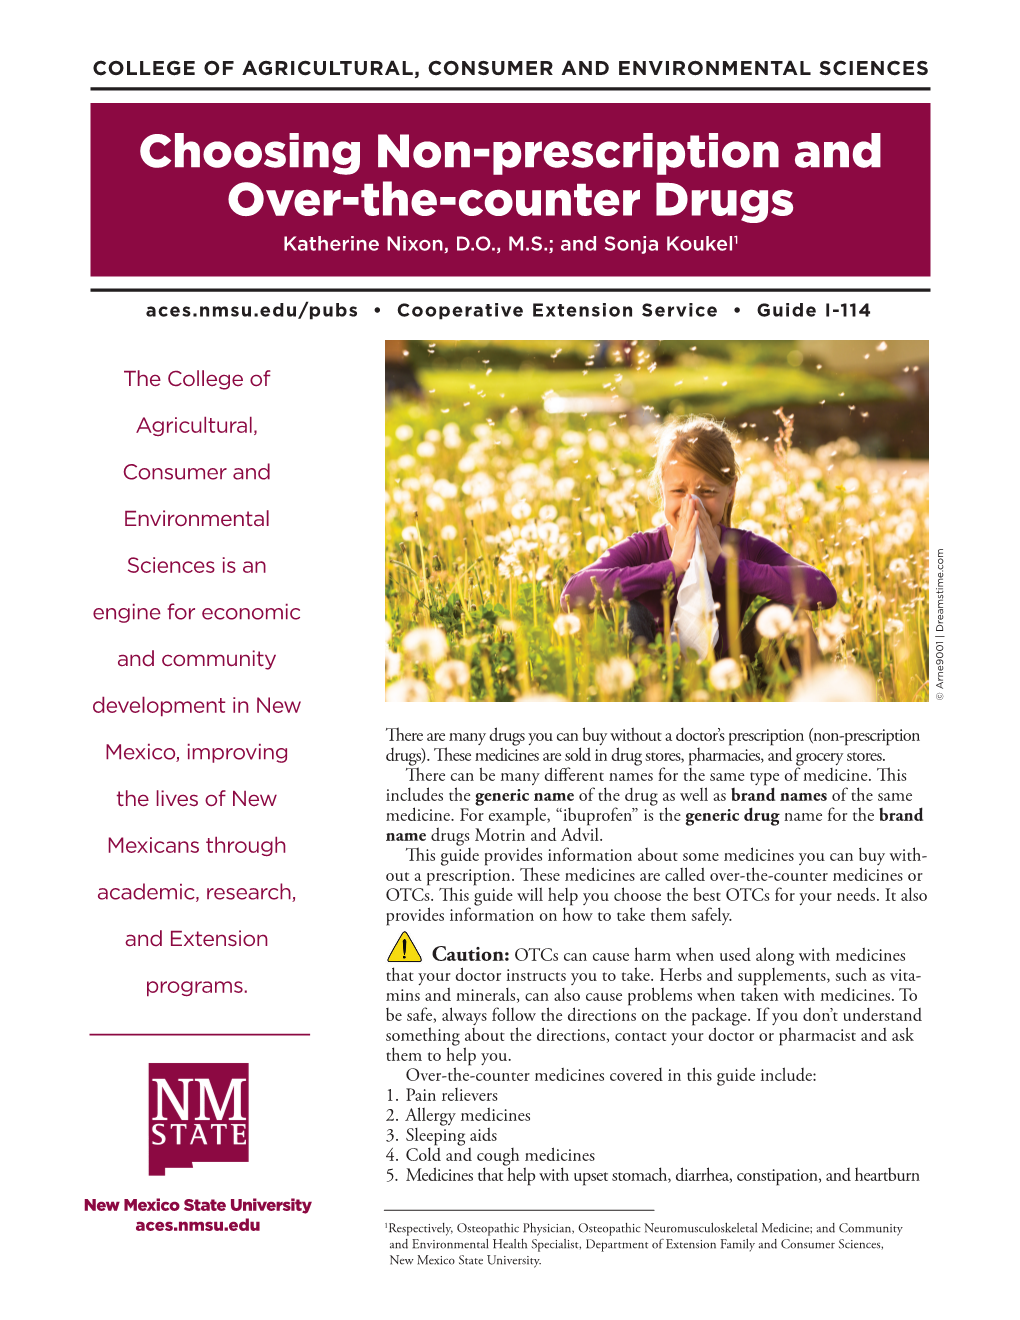 I-114: Choosing Non-Prescription and Over-The-Counter Drugs